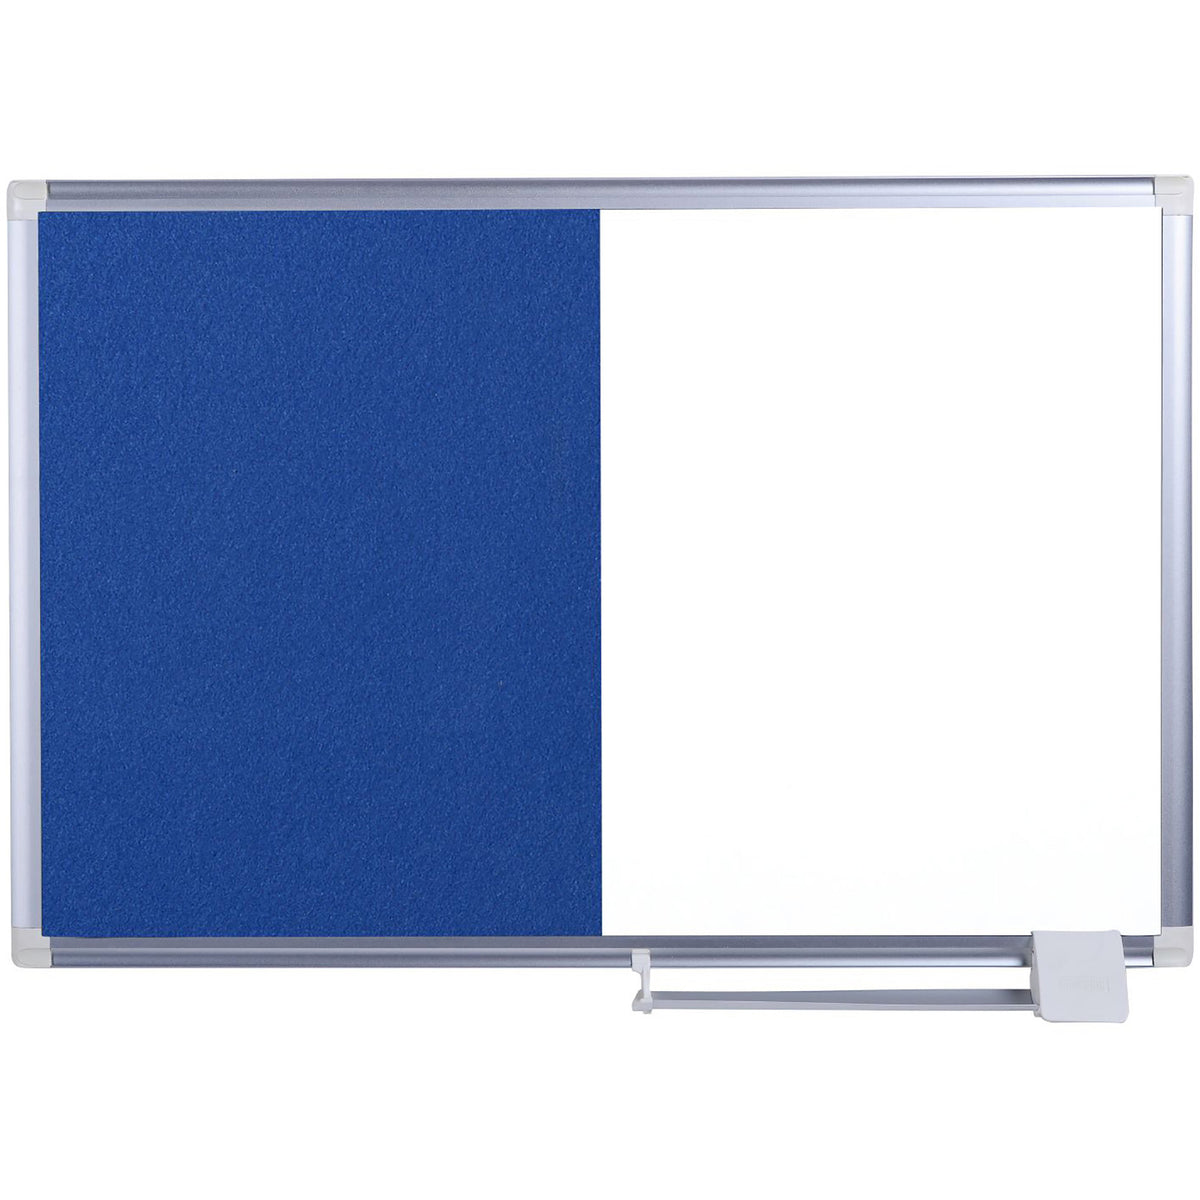 XA2722830 New-Gen Series Magnetic Dry Erase White Board Blue Felt Bulletin Board Combo, Wall Mount, Sliding Marker Tray, 48" x 72", Aluminum Frame by MasterVision